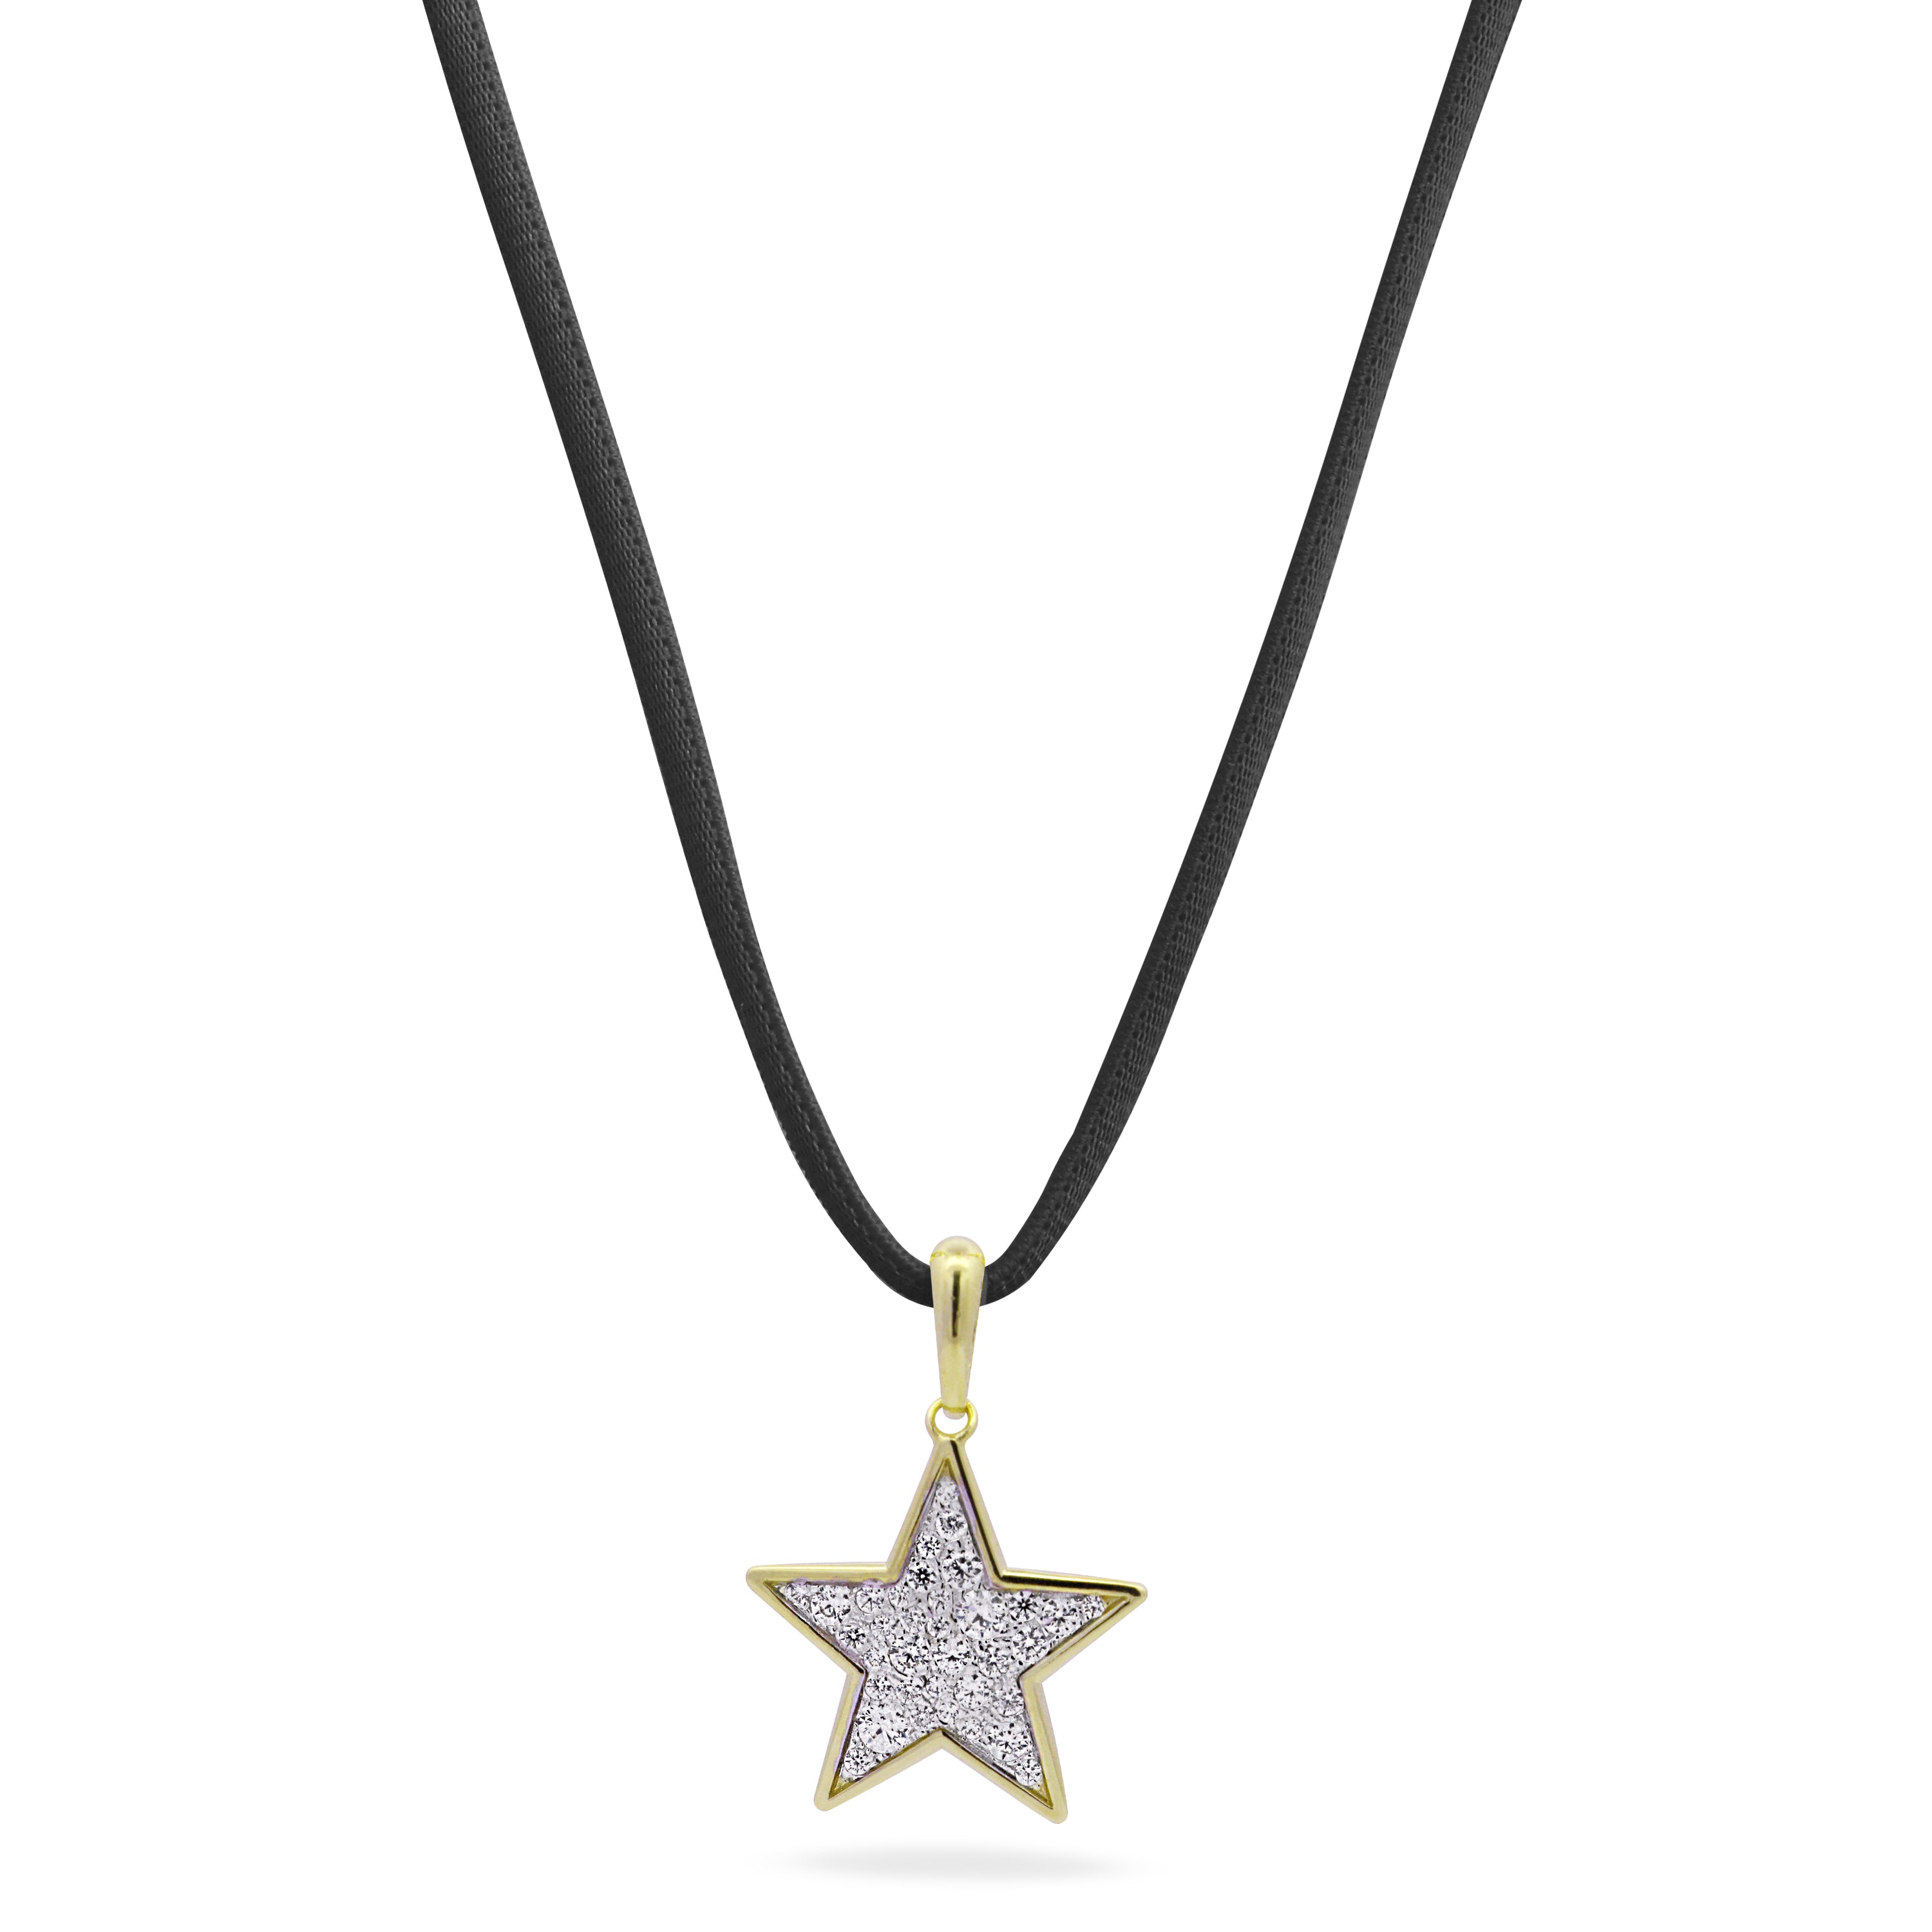 Oversized pave star pendant with black choker - STARDUST TEN